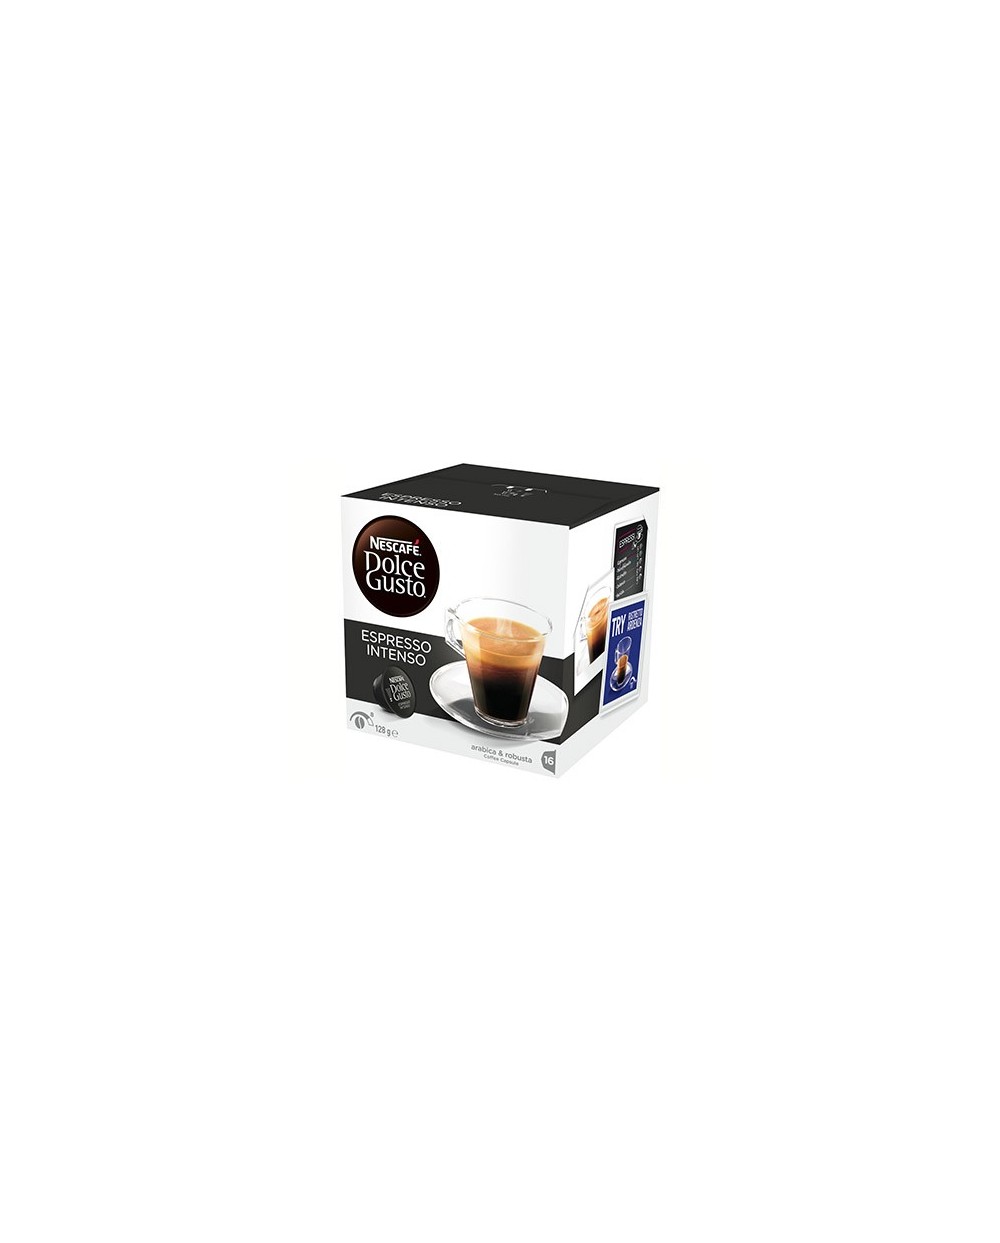 Cafe dolce gusto cafe espresso intenso monodosis caja de 16 unidades